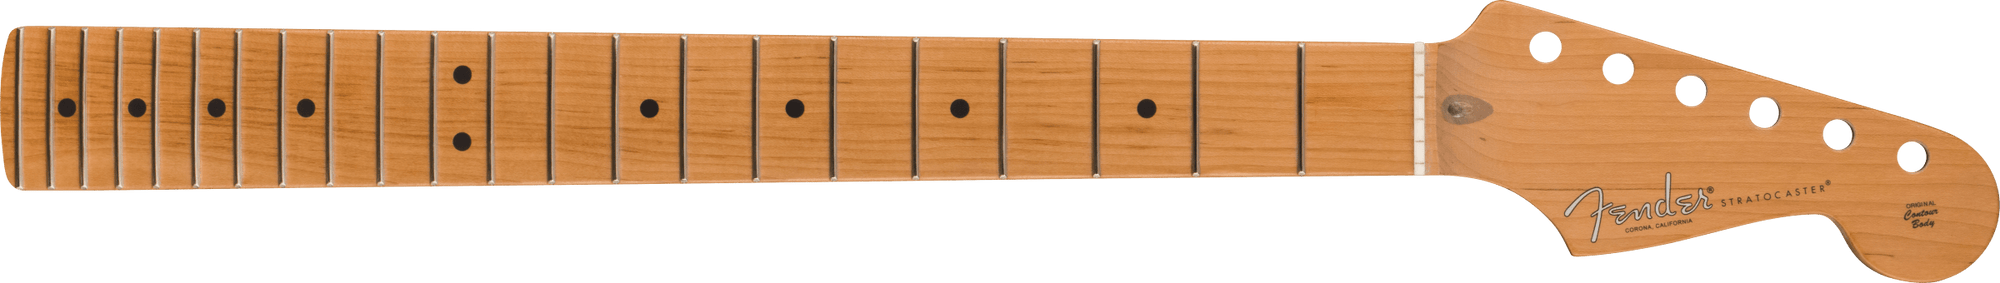 AMERICAN PRO II STRAT NECK 22 NARROW TALL FRETS 9.5 inch ROASTED MAPLE